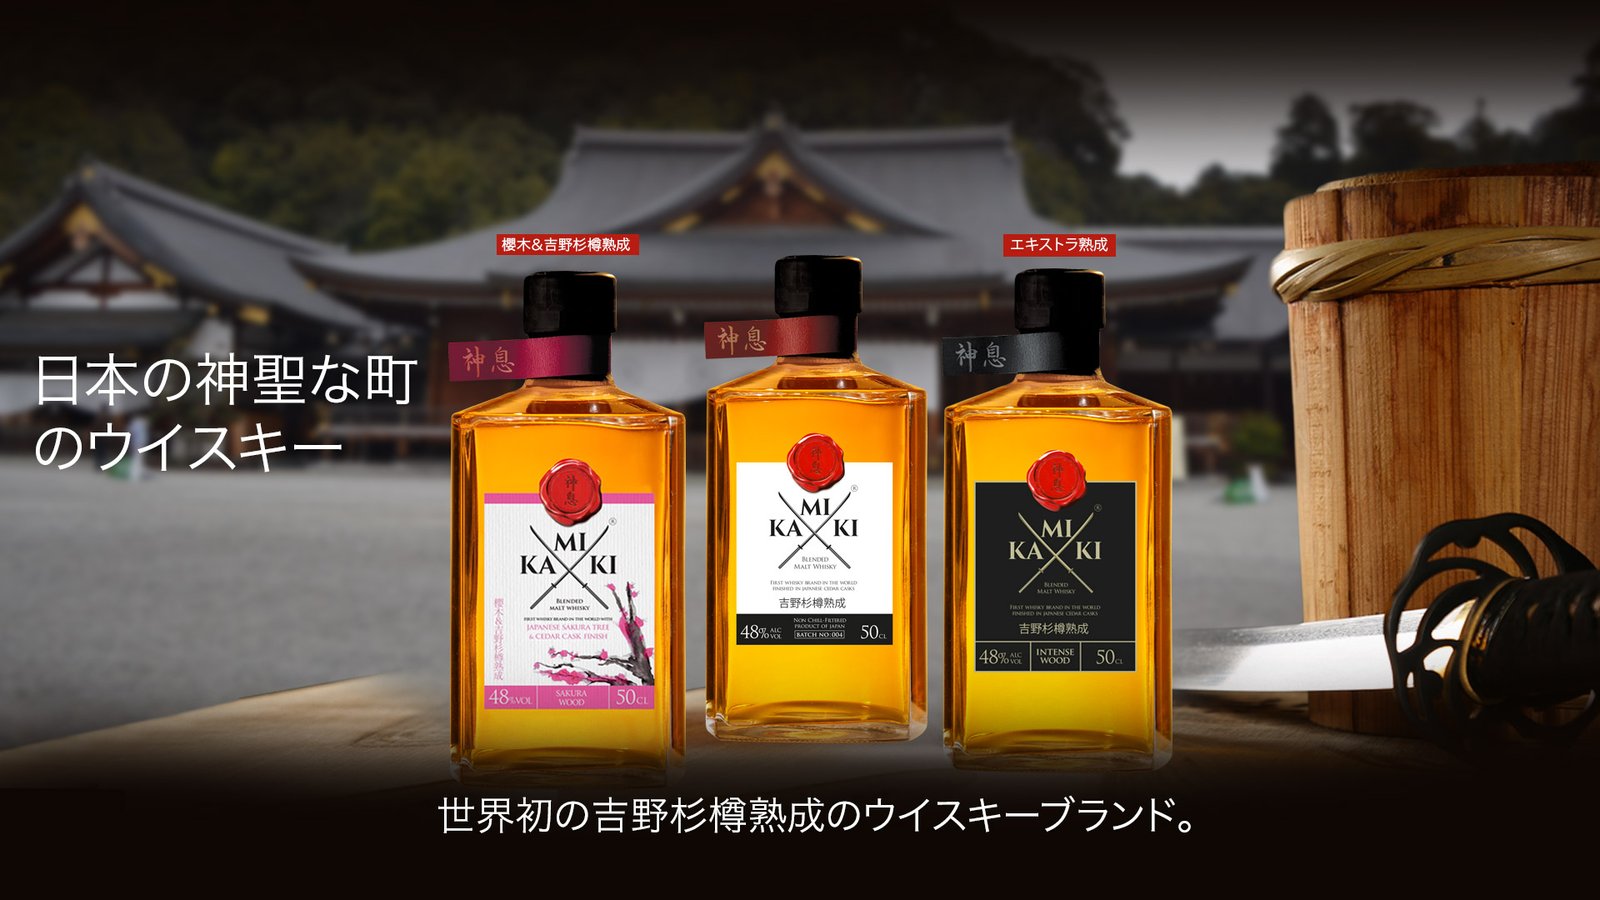 Kamiki Whisky Kamikiは 世界初の吉野杉樽熟成ウイスキーブランド です